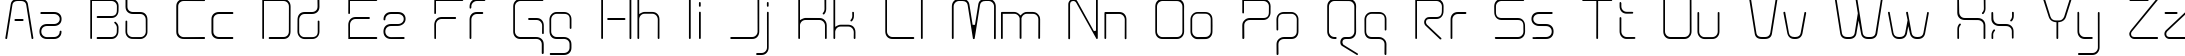 Пример написания английского алфавита шрифтом Aunchanted Thin